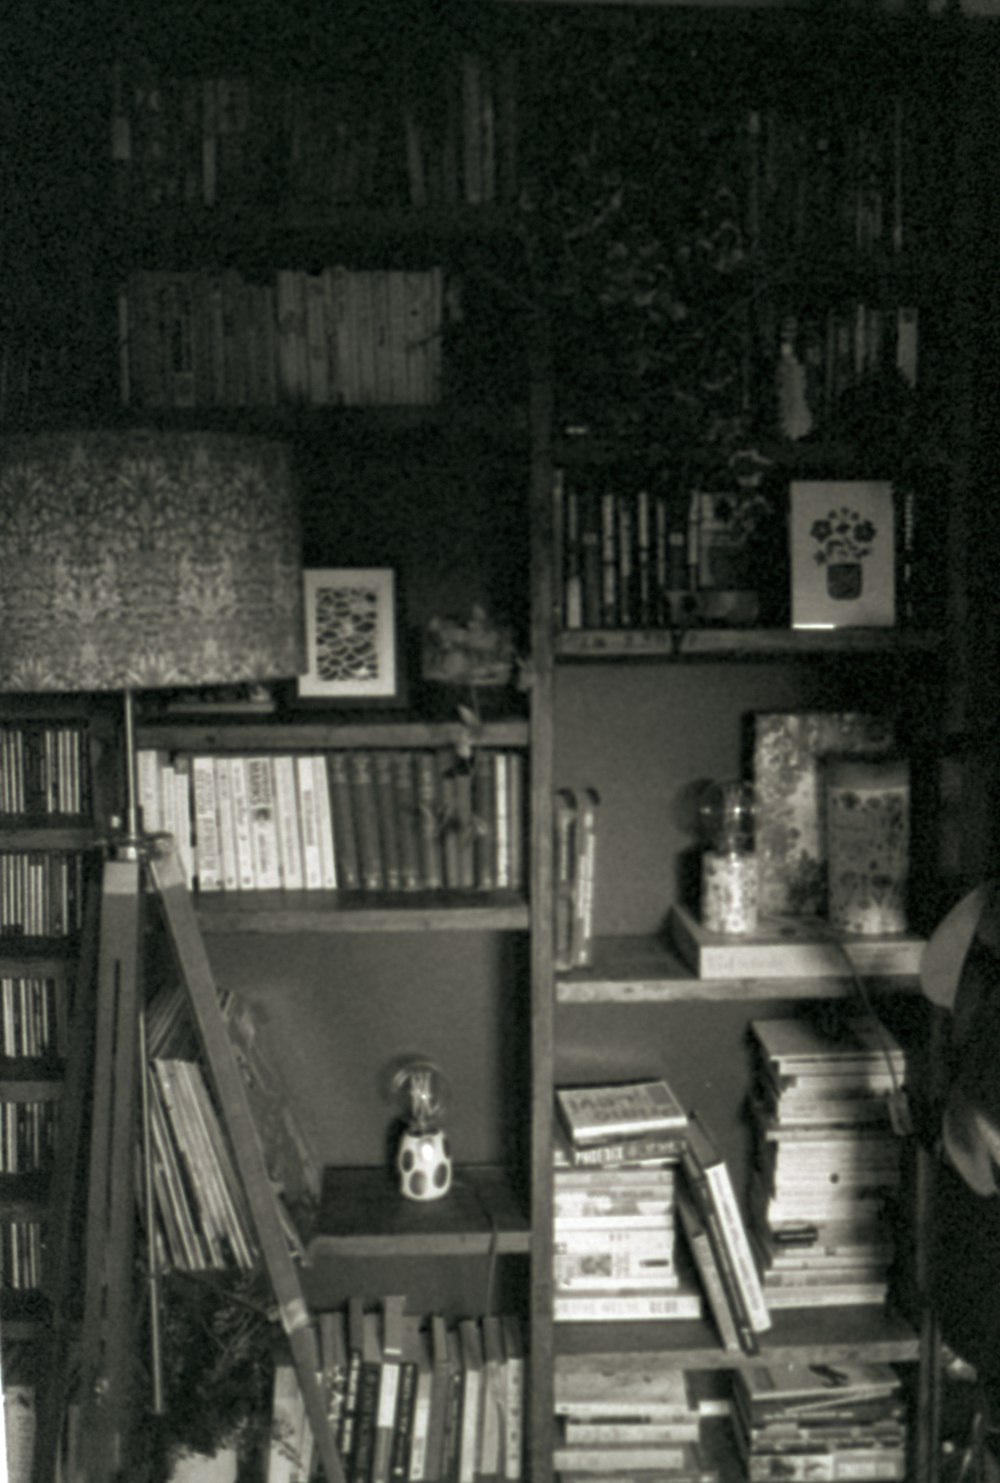 a black and white photo of a bookshelf full of books